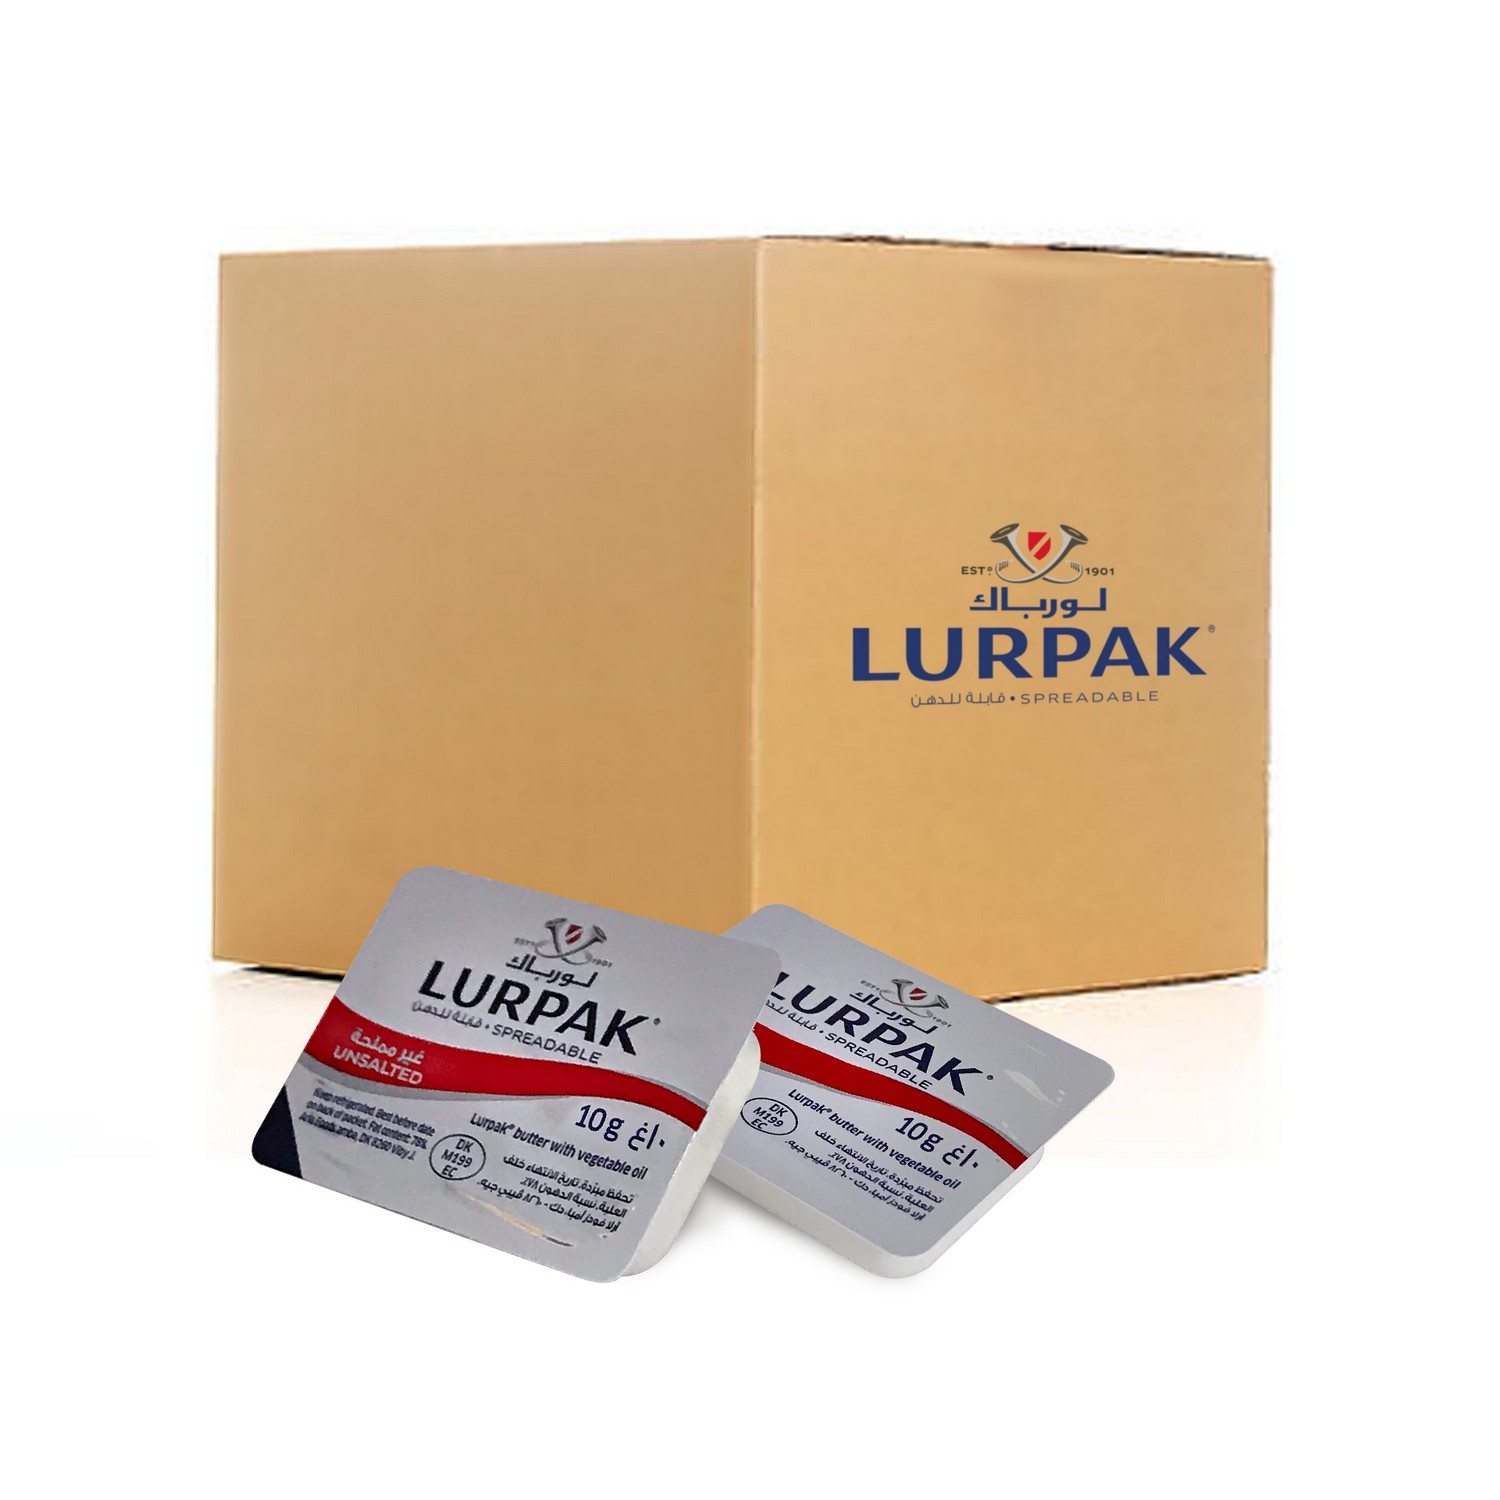 lurpak butter prices - photo #20